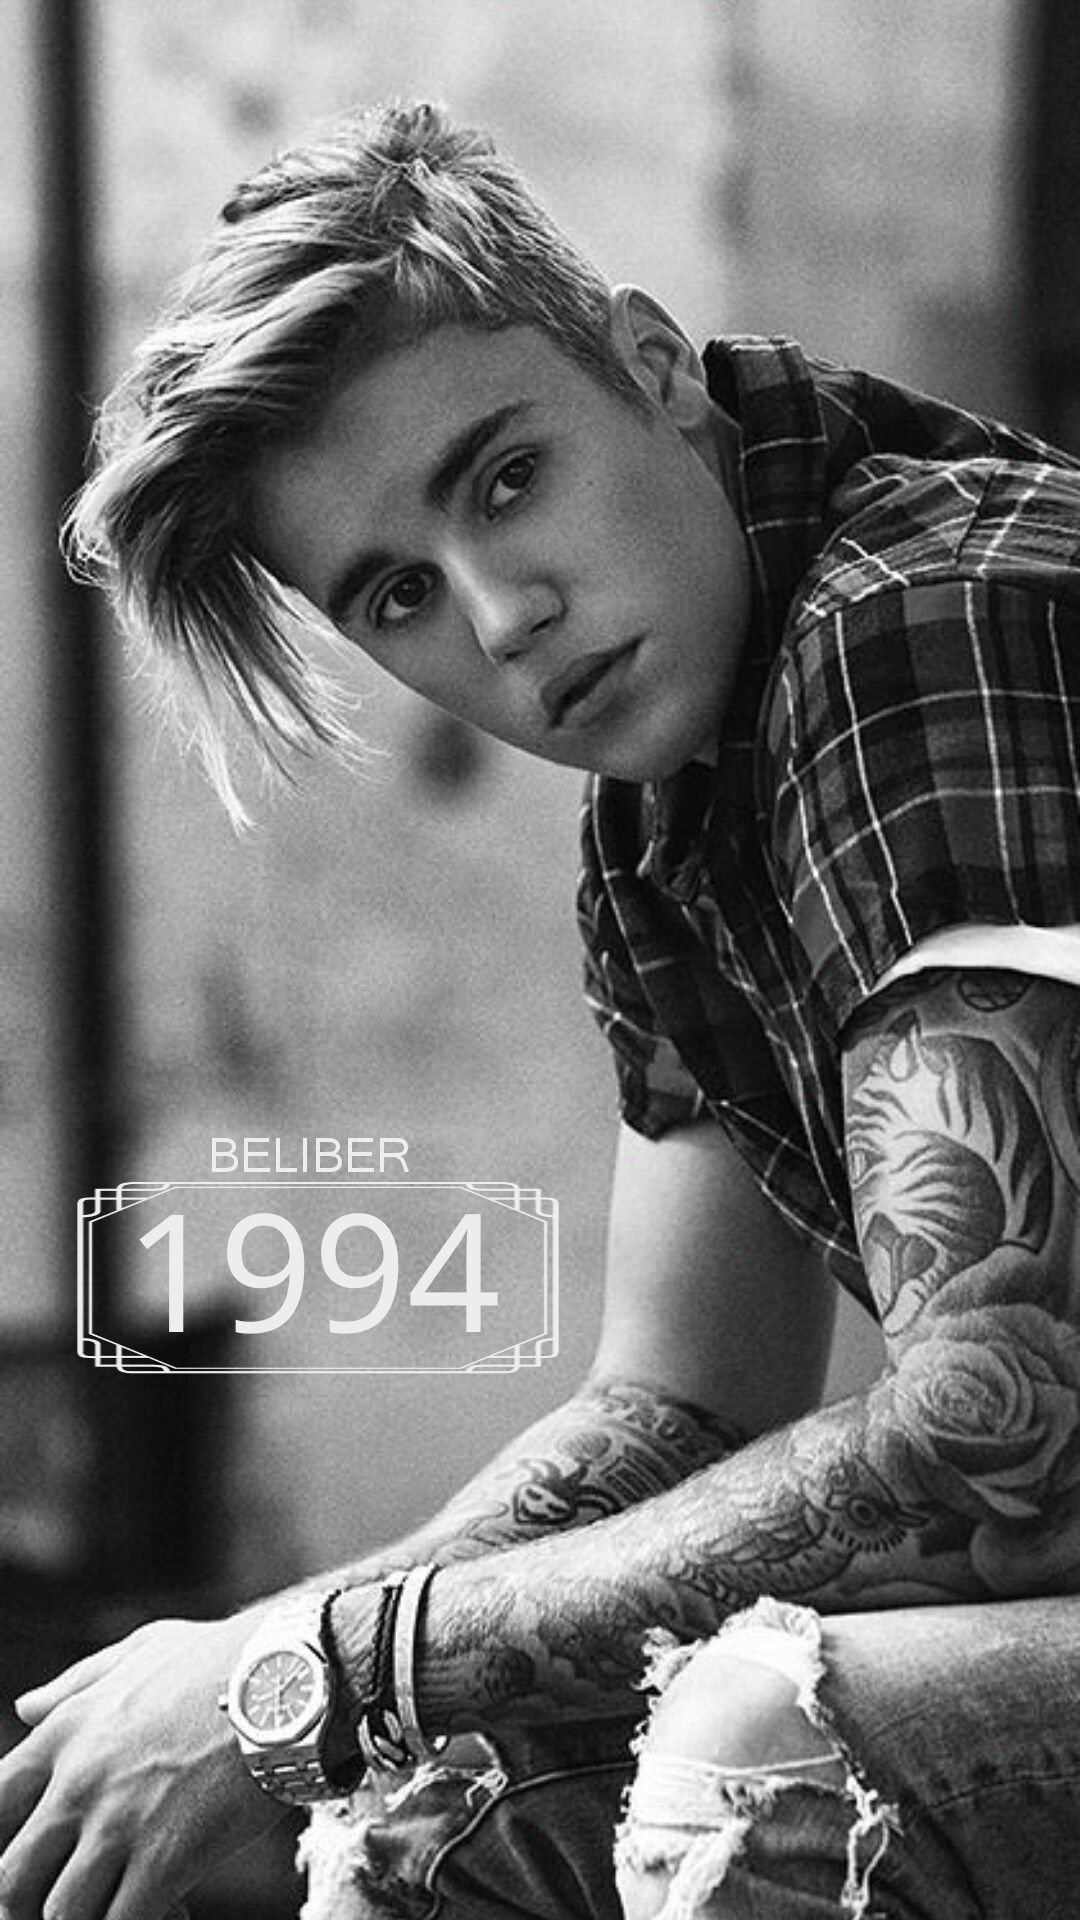 I Made This Justin Bieber Lockscreen Wallpaper ❤. Justin bieber photo, Justin bieber picture, I love justin bieber